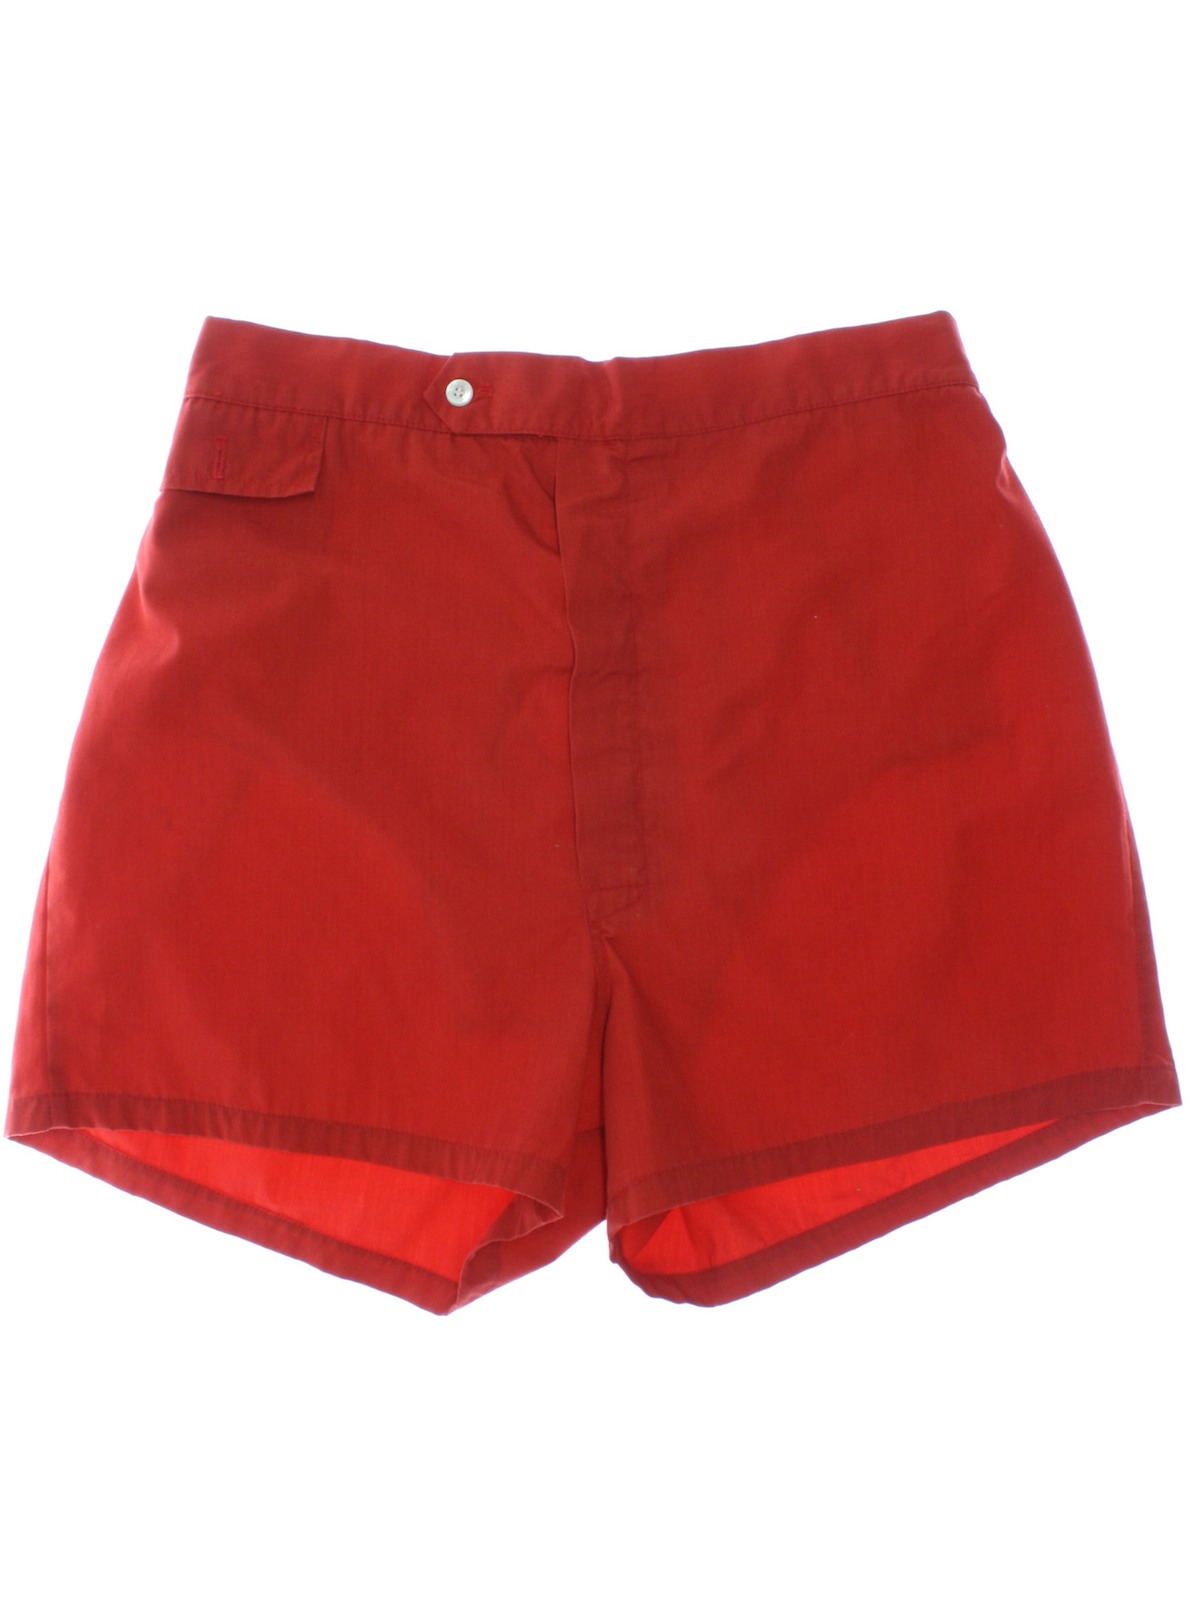 1960s Vintage Swimsuit/Swimwear: 60s -California Swimwear- Mens red ...